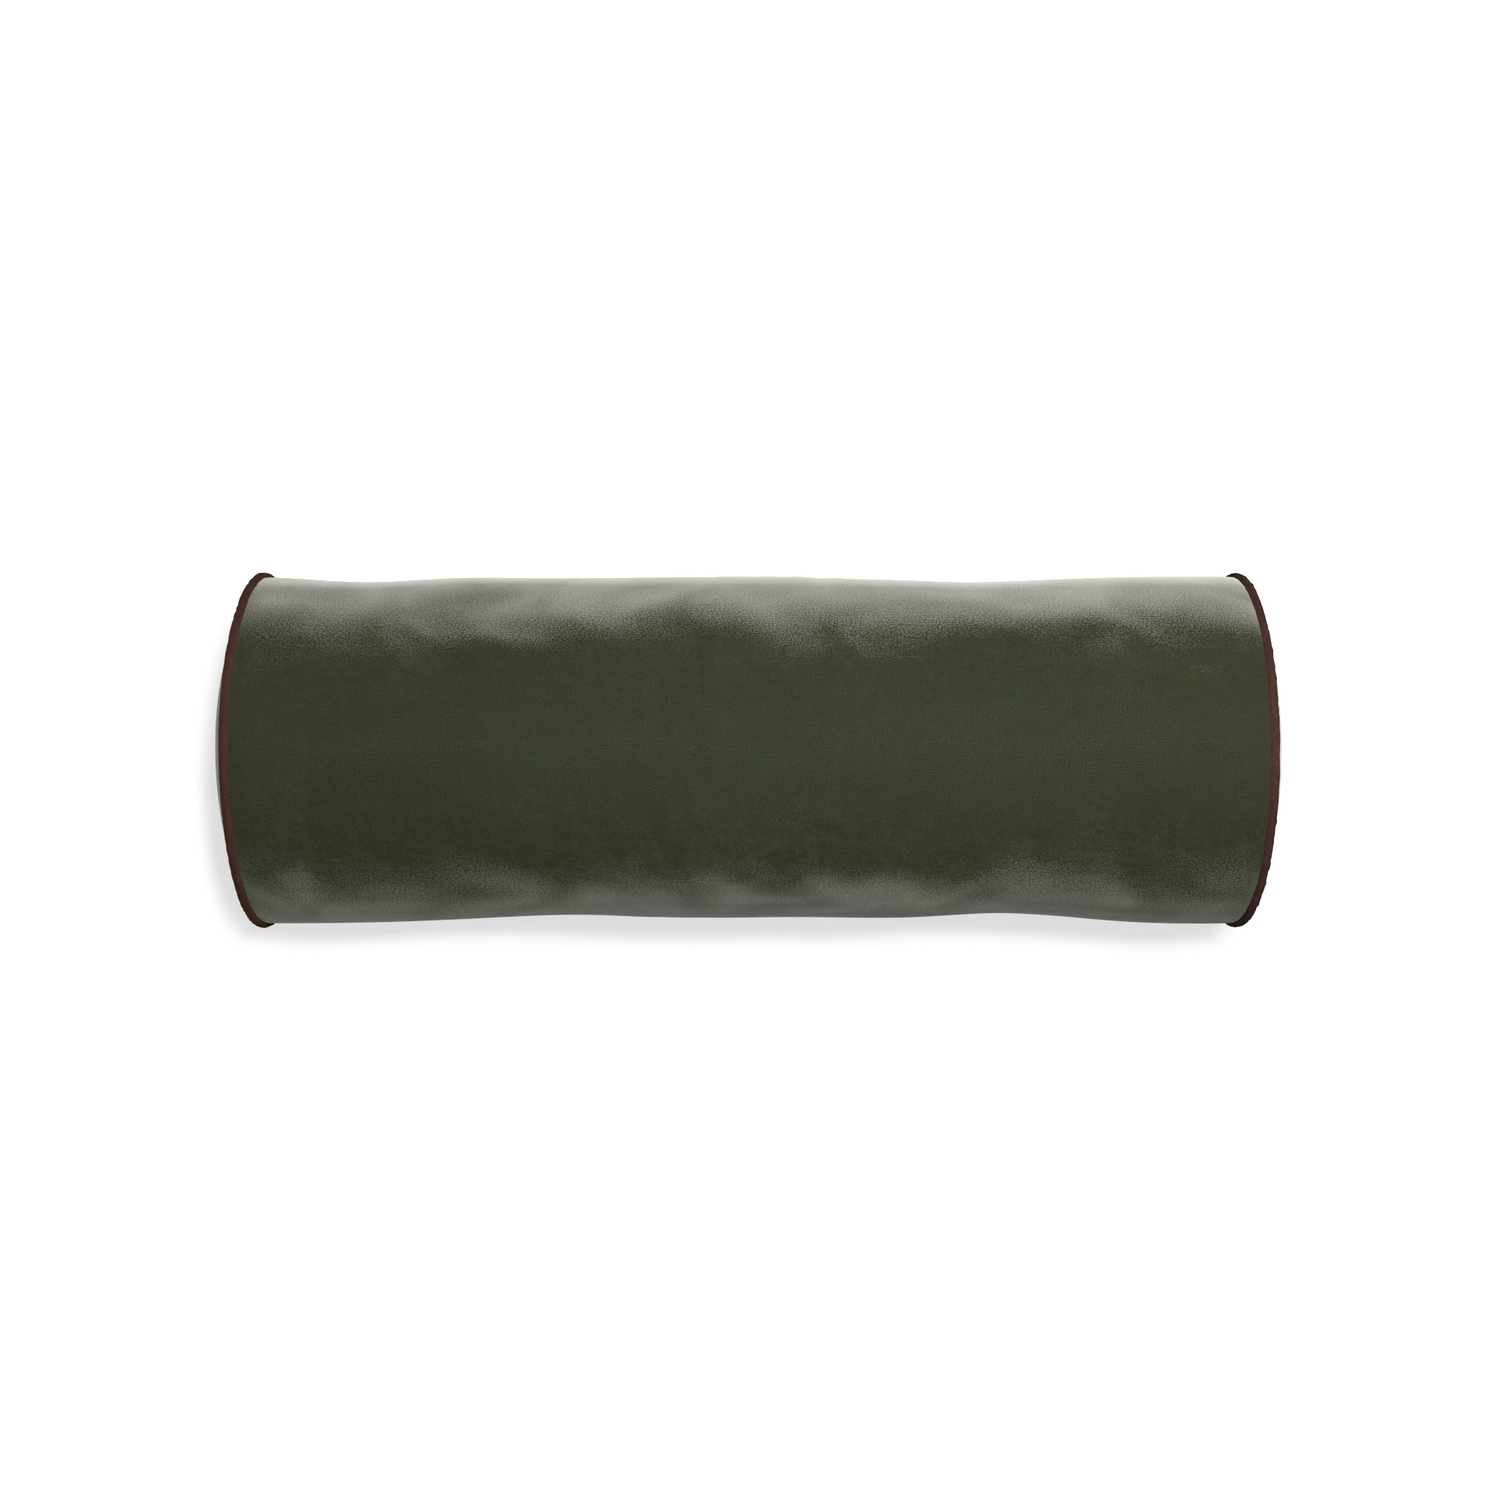 bolster fern green velvet pillow with brown piping